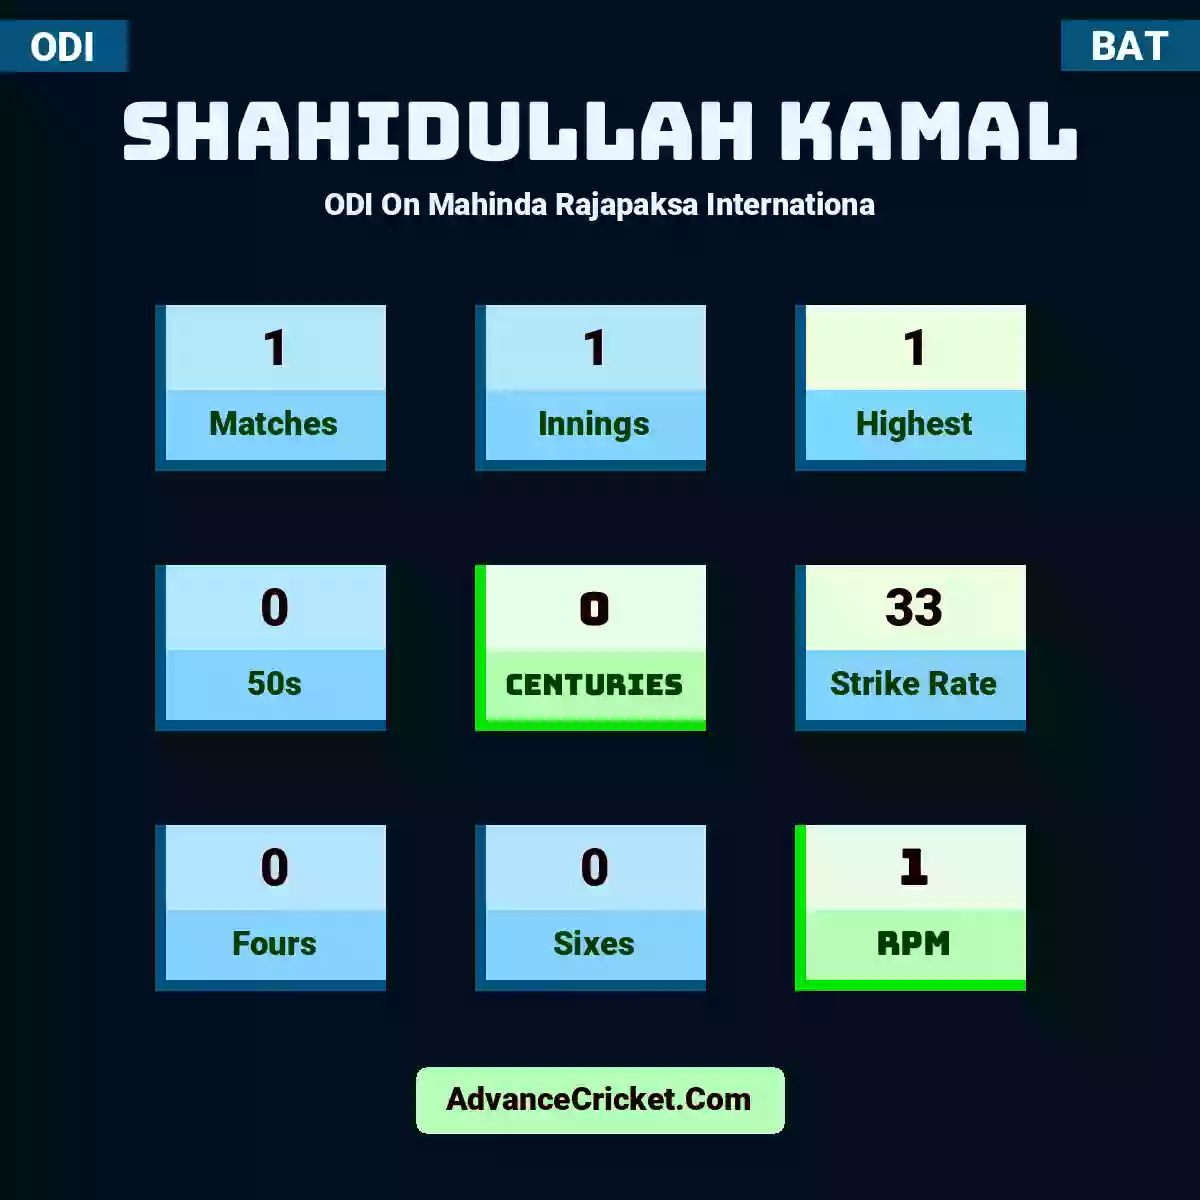 Shahidullah Kamal ODI  On Mahinda Rajapaksa Internationa, Shahidullah Kamal played 1 matches, scored 1 runs as highest, 0 half-centuries, and 0 centuries, with a strike rate of 33. S.Kamal hit 0 fours and 0 sixes, with an RPM of 1.